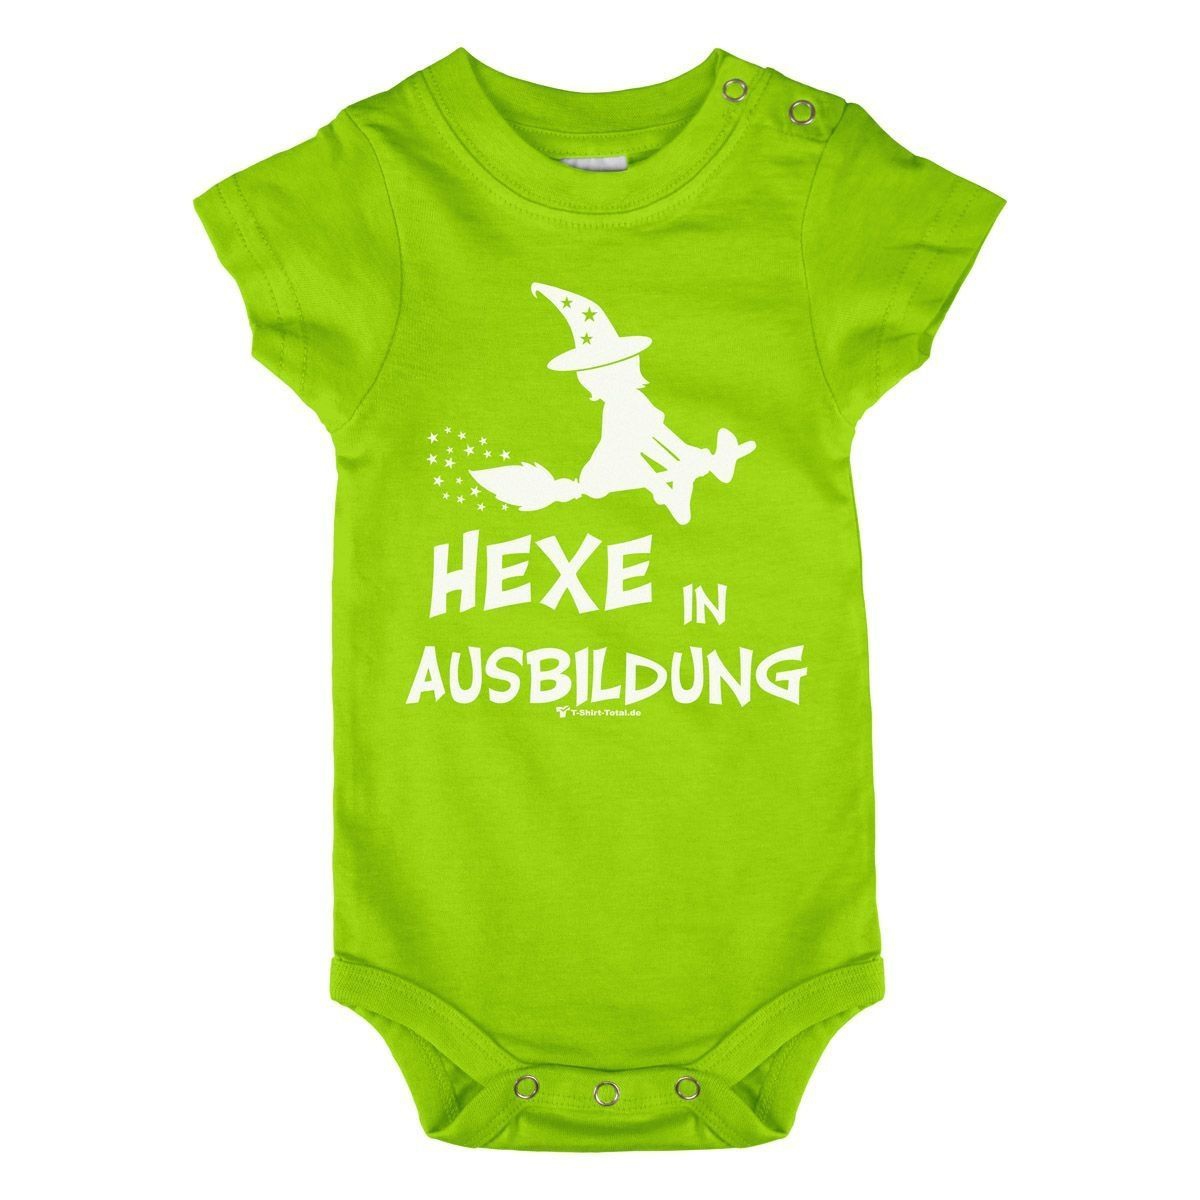 Hexe in Ausbildung Baby Body Kurzarm hellgrün 68 / 74